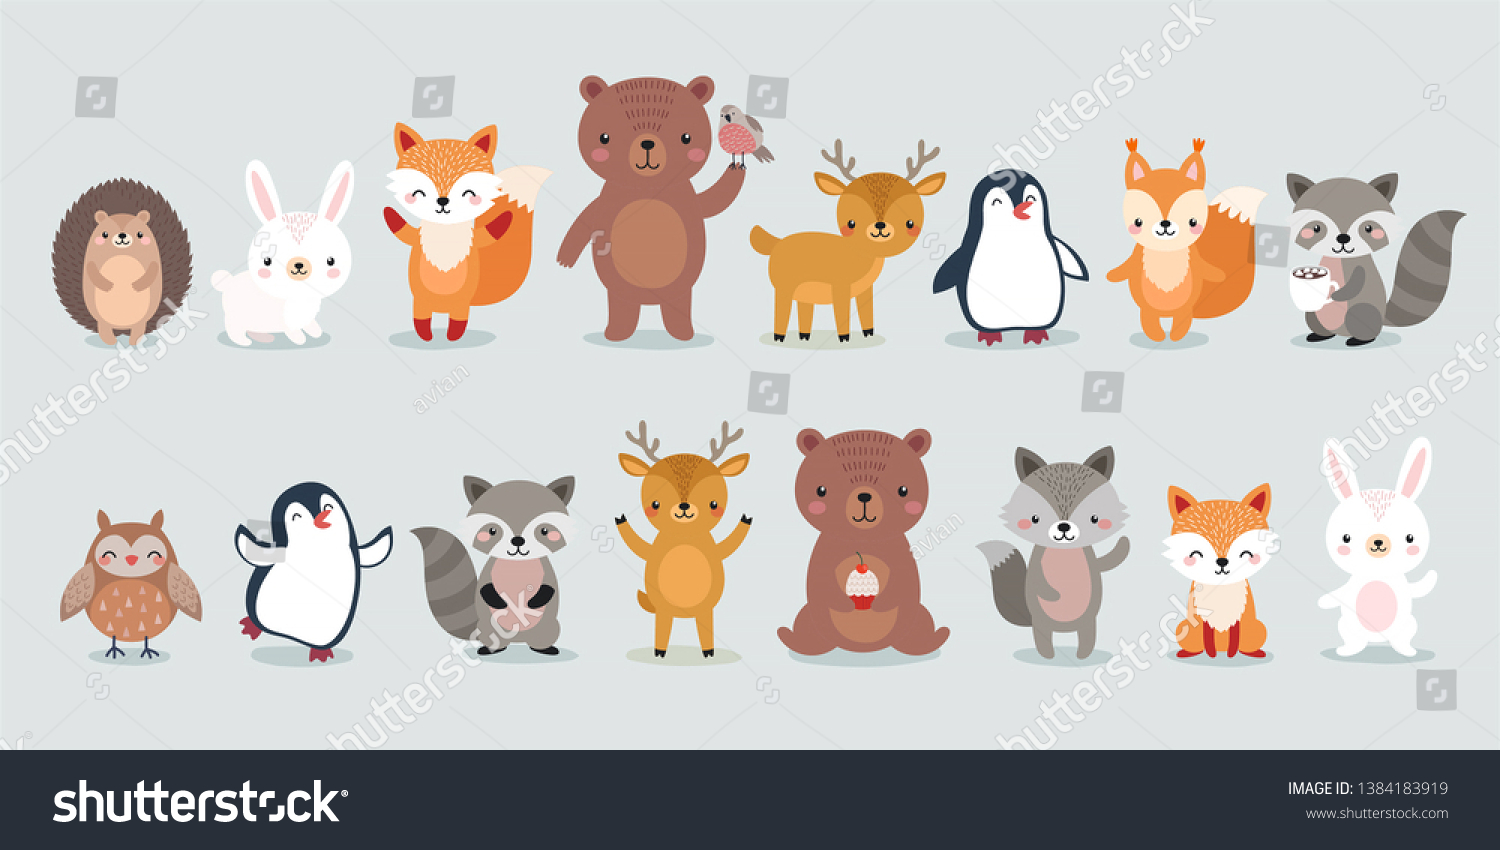 woodland characters -  bear, fox, raccoon, hedgehog, penguin, deer, rabbit, owl and squirrel. Cute forest animals. Vector illustration. #1384183919